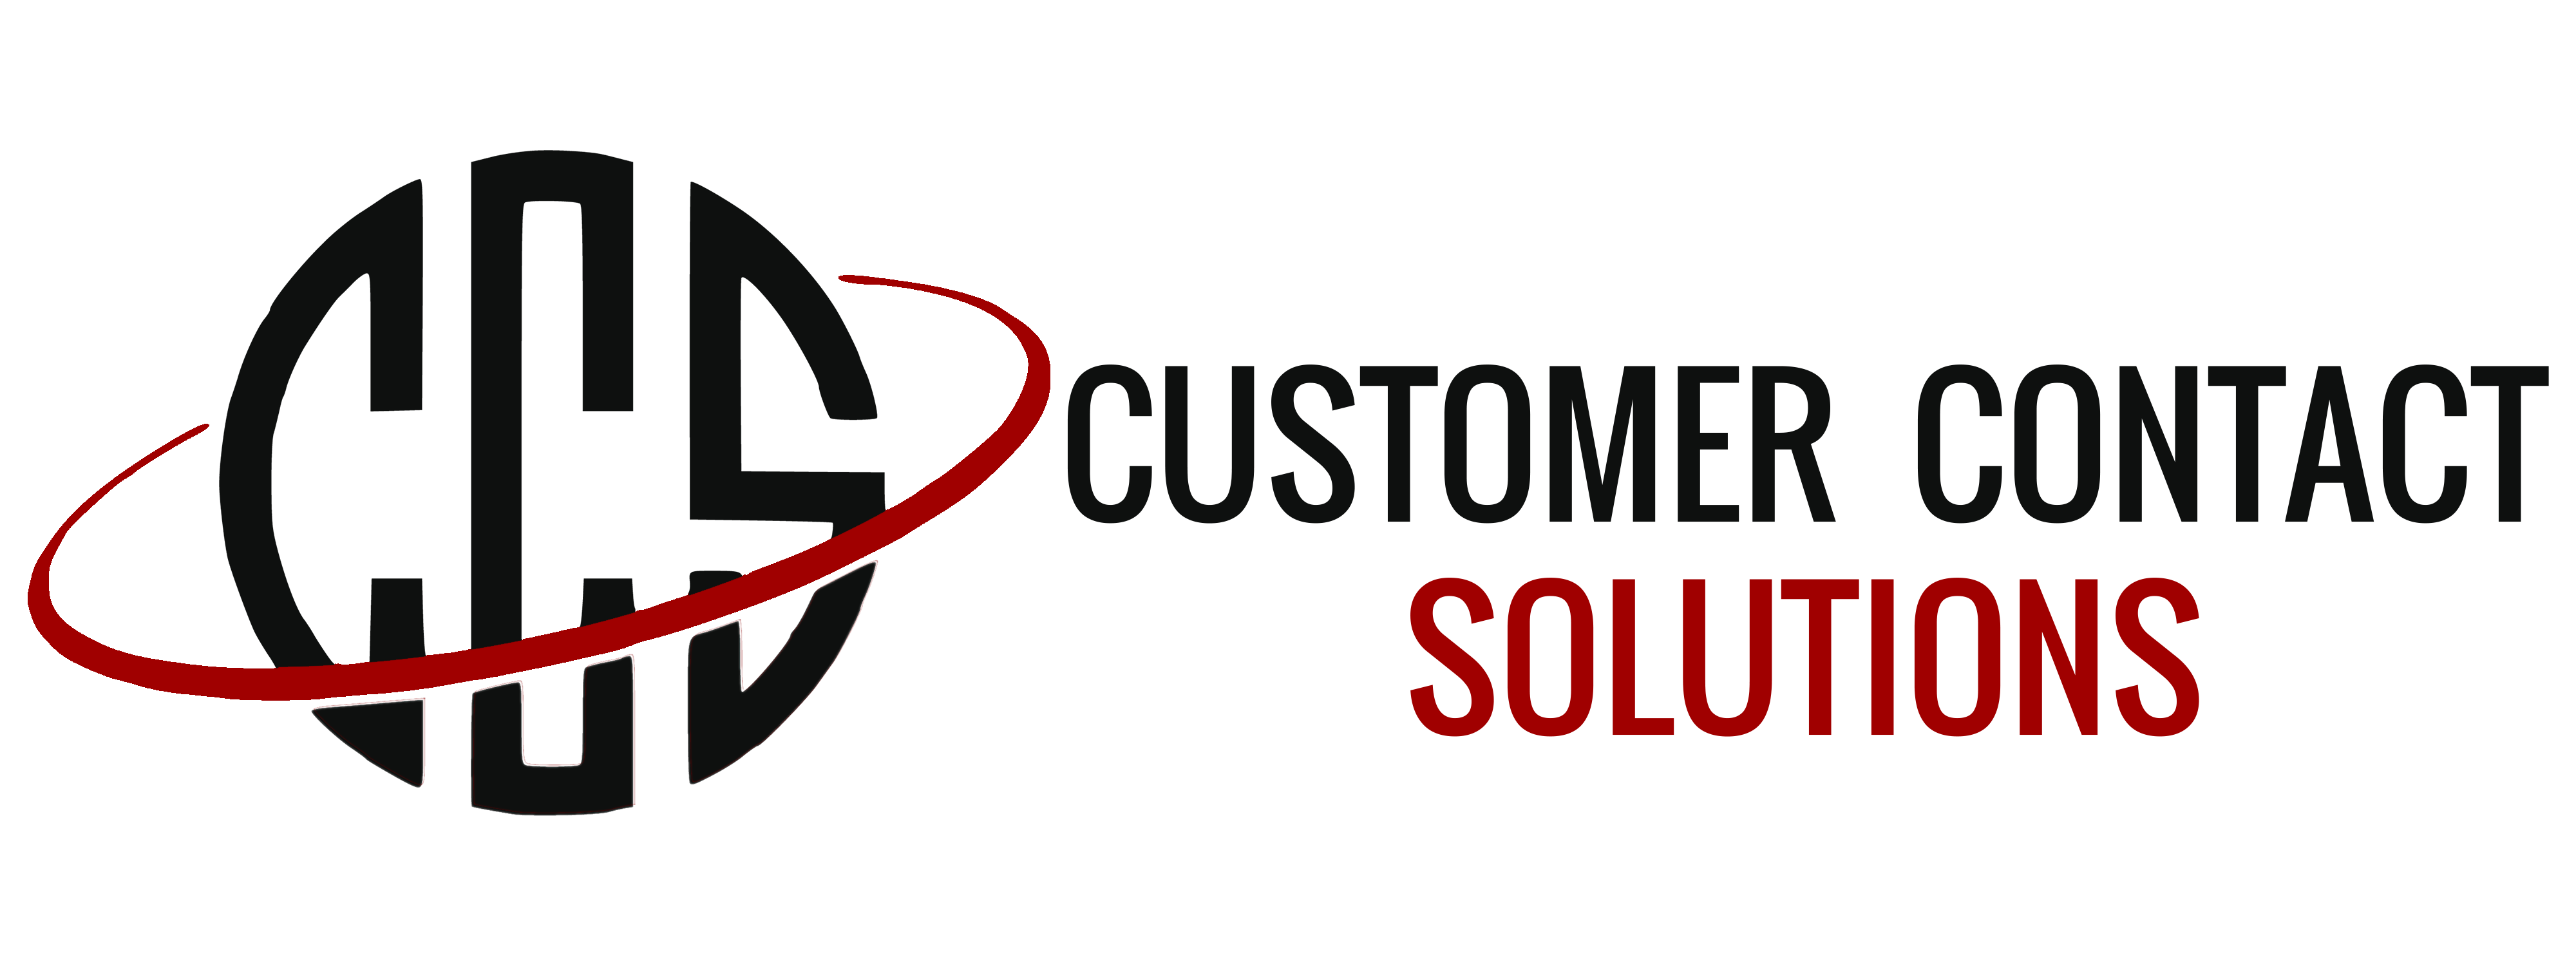 Customer Contact Solutions USA